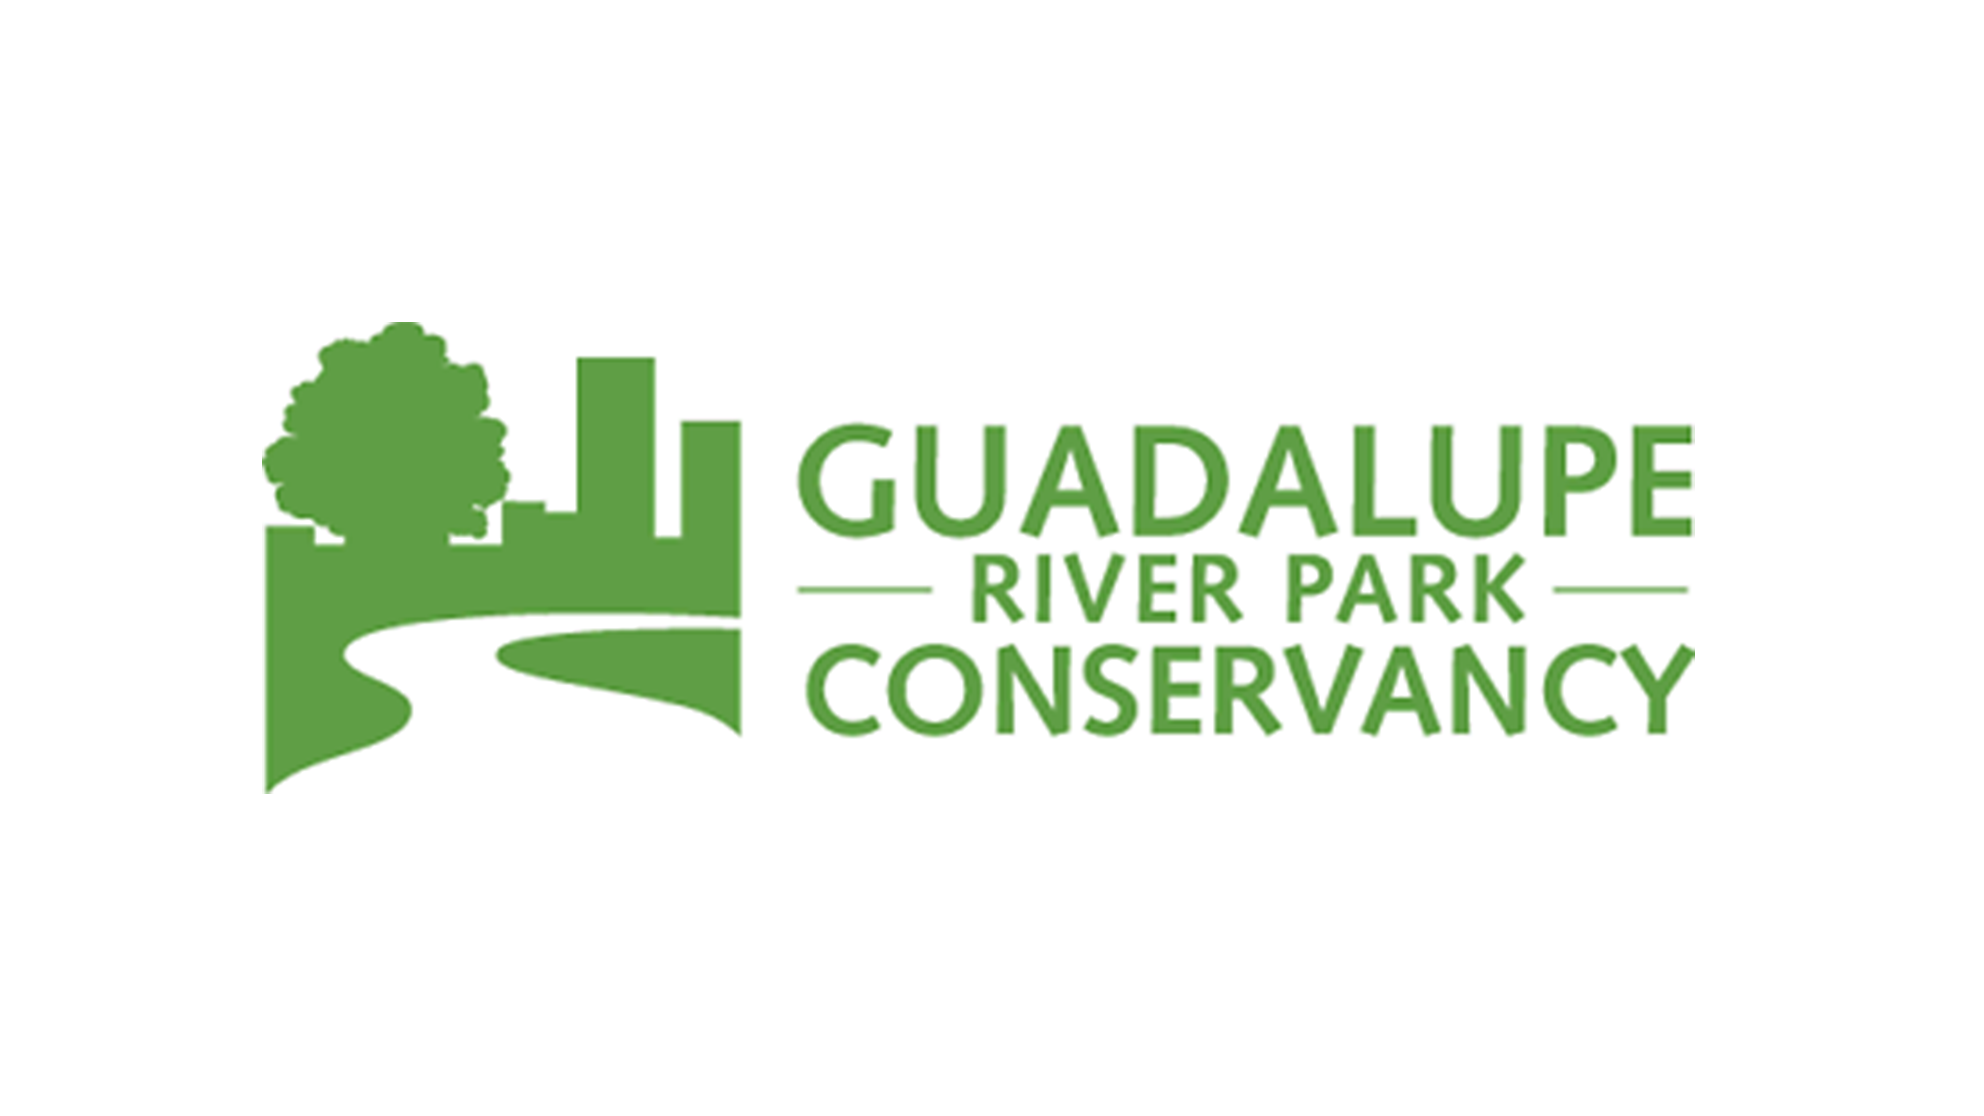 Guadalupe River Park Conservancy logo